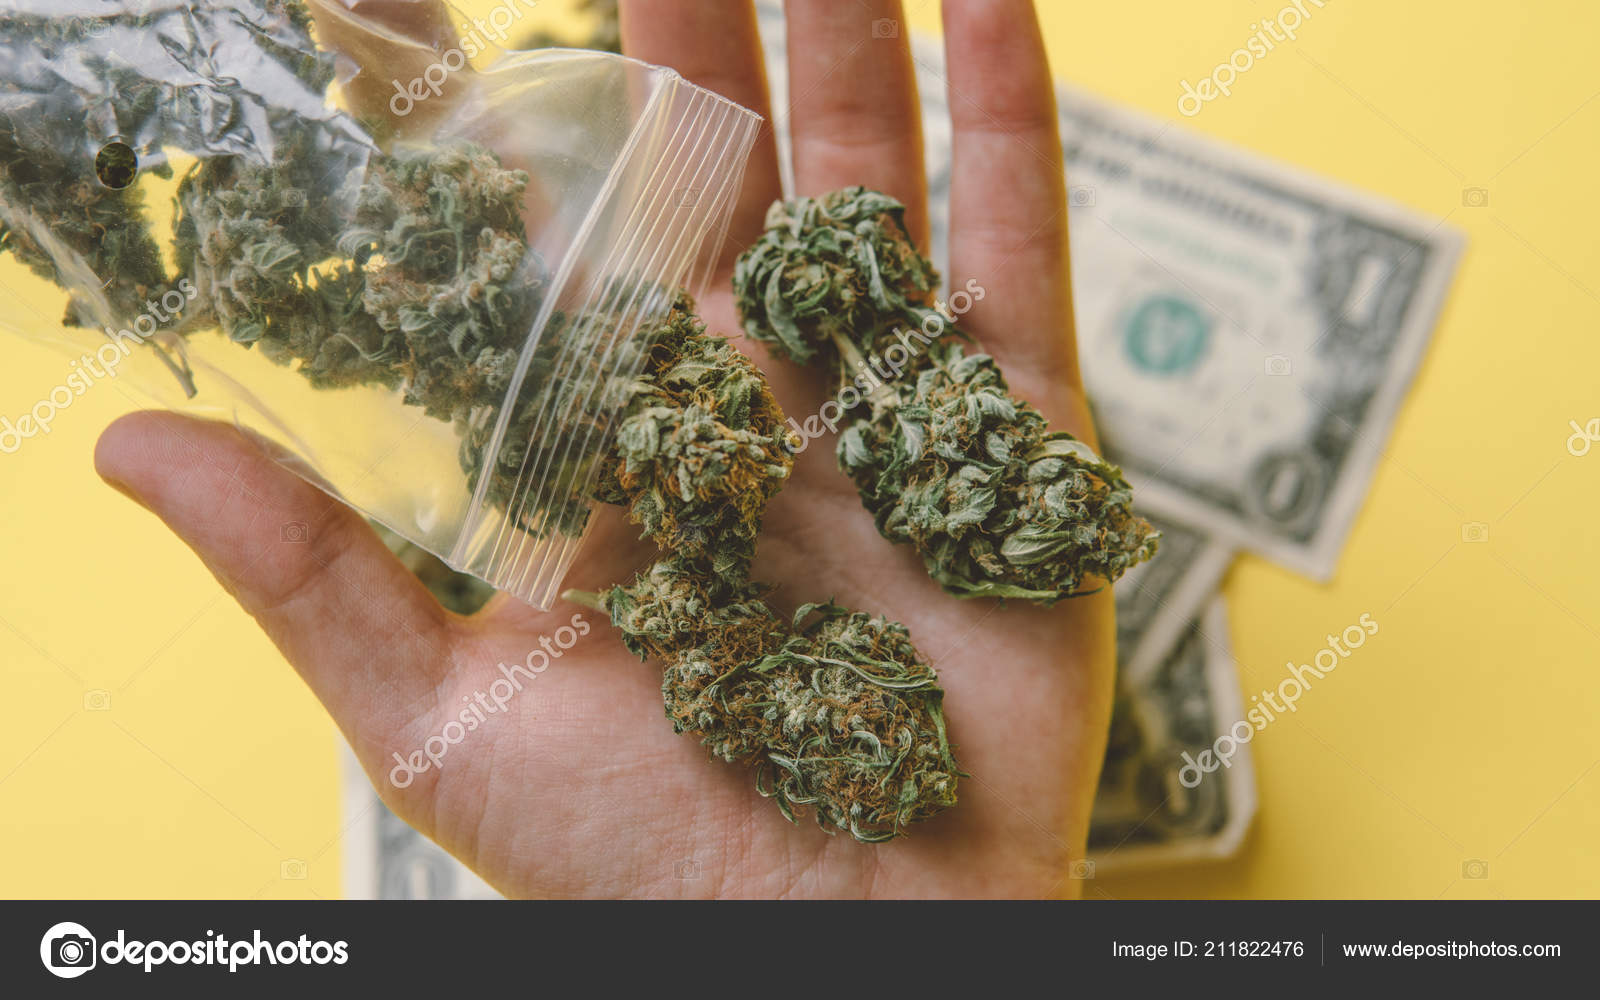 depositphotos_211822476-stock-photo-handful-of-marijuana-weed-close.jpg